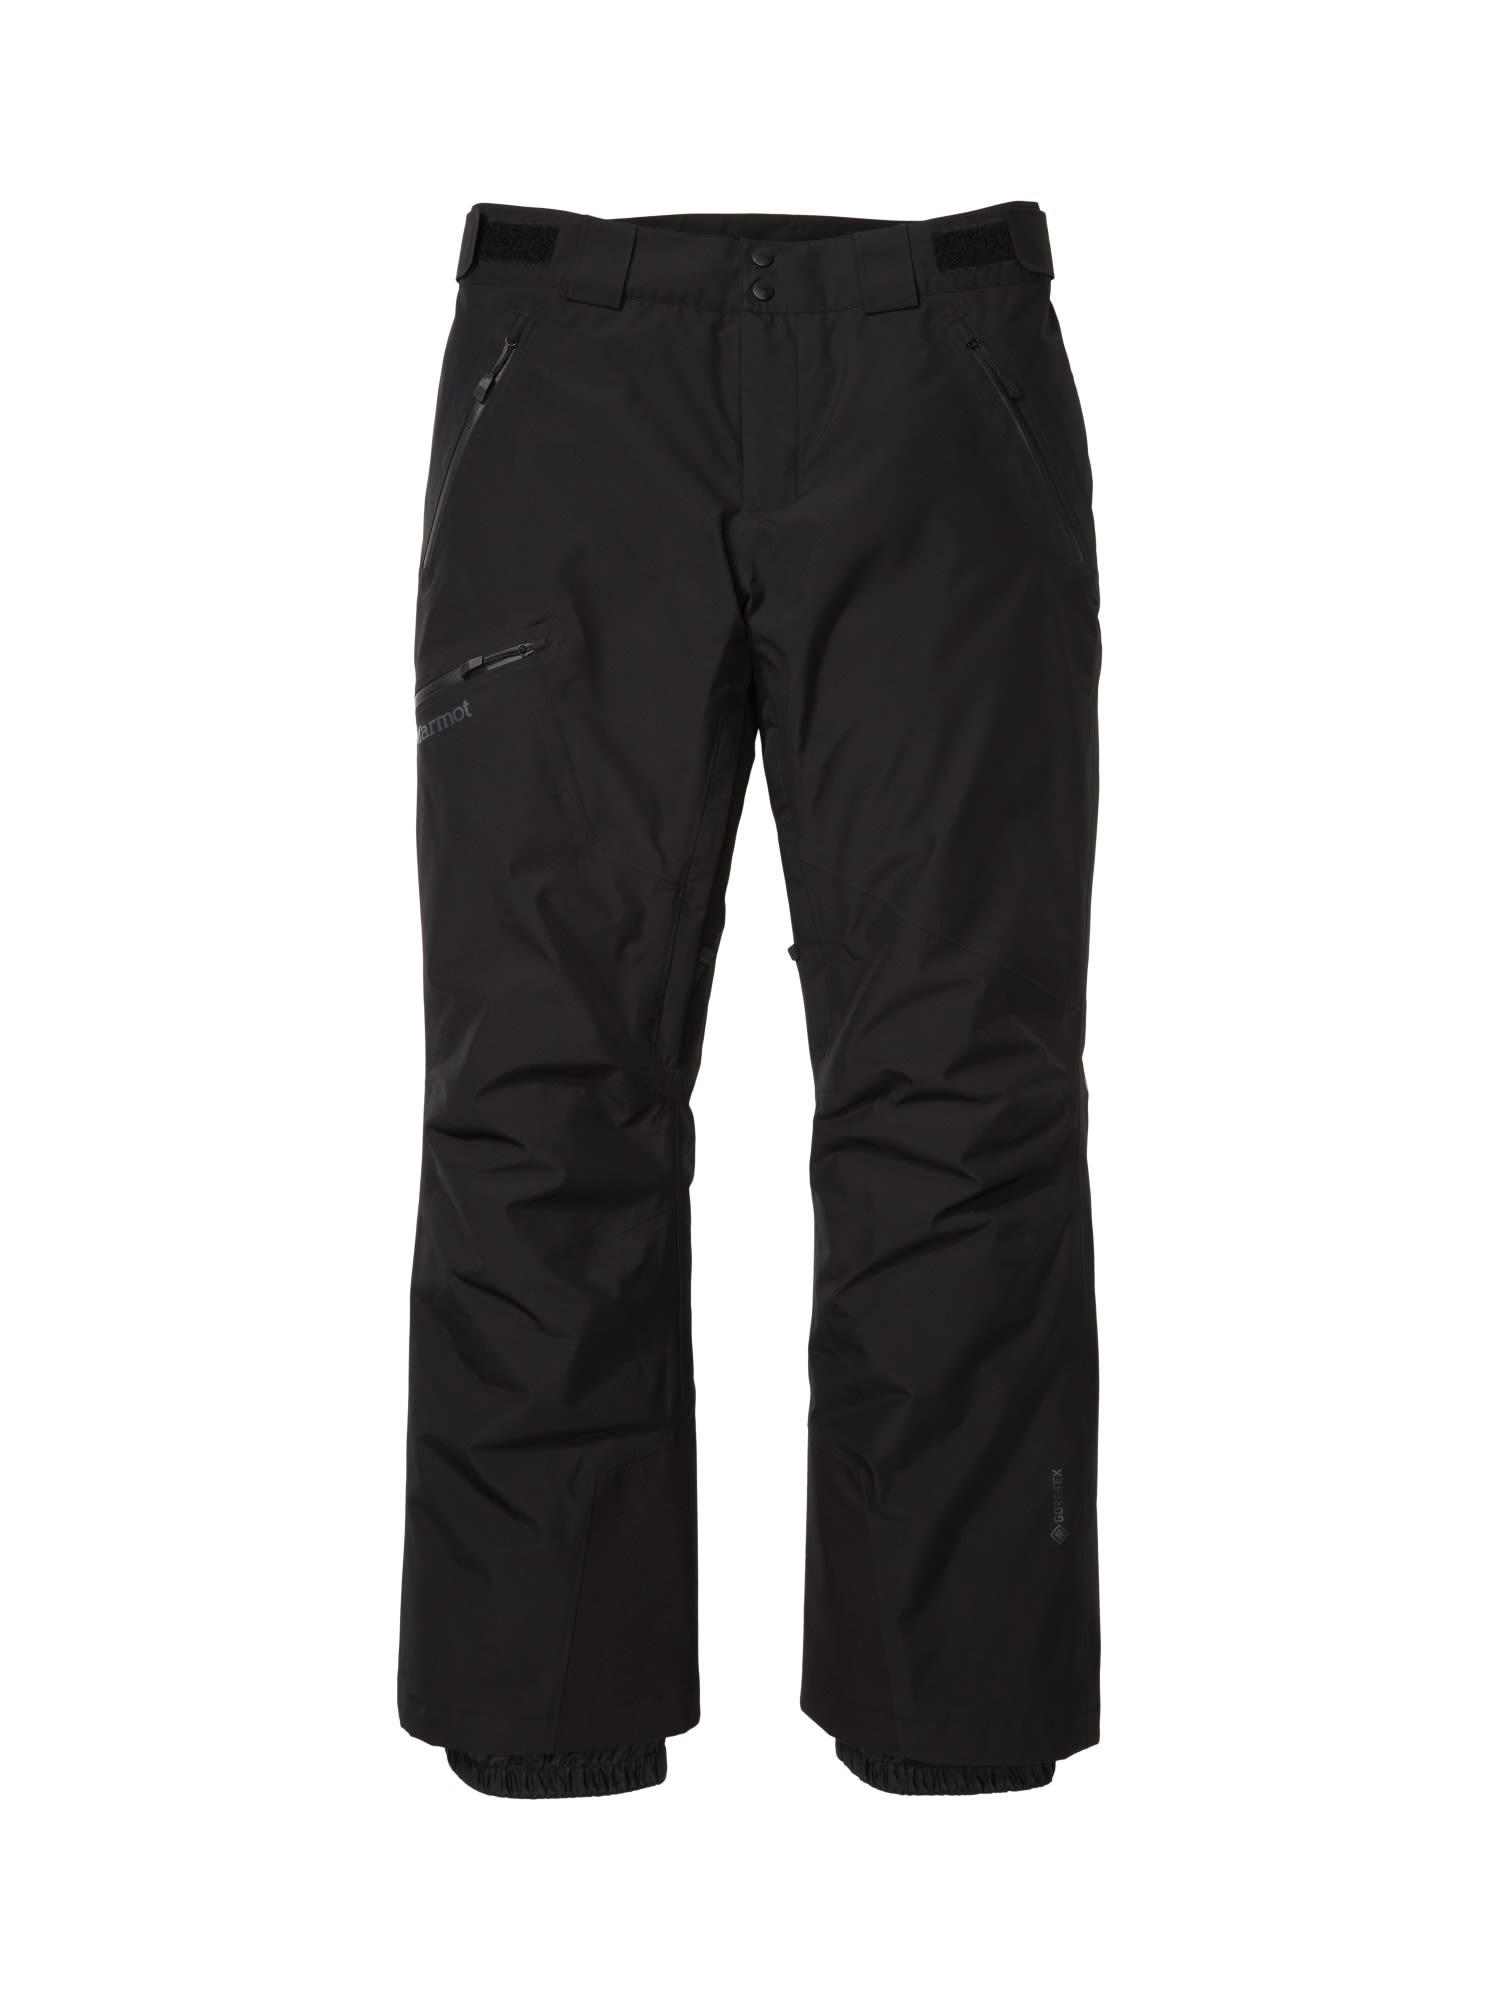 Marmot Lightray Pant Schwarz- Male Gore-Tex(R) Lange Hosen- Grsse S - Farbe Black unter Marmot